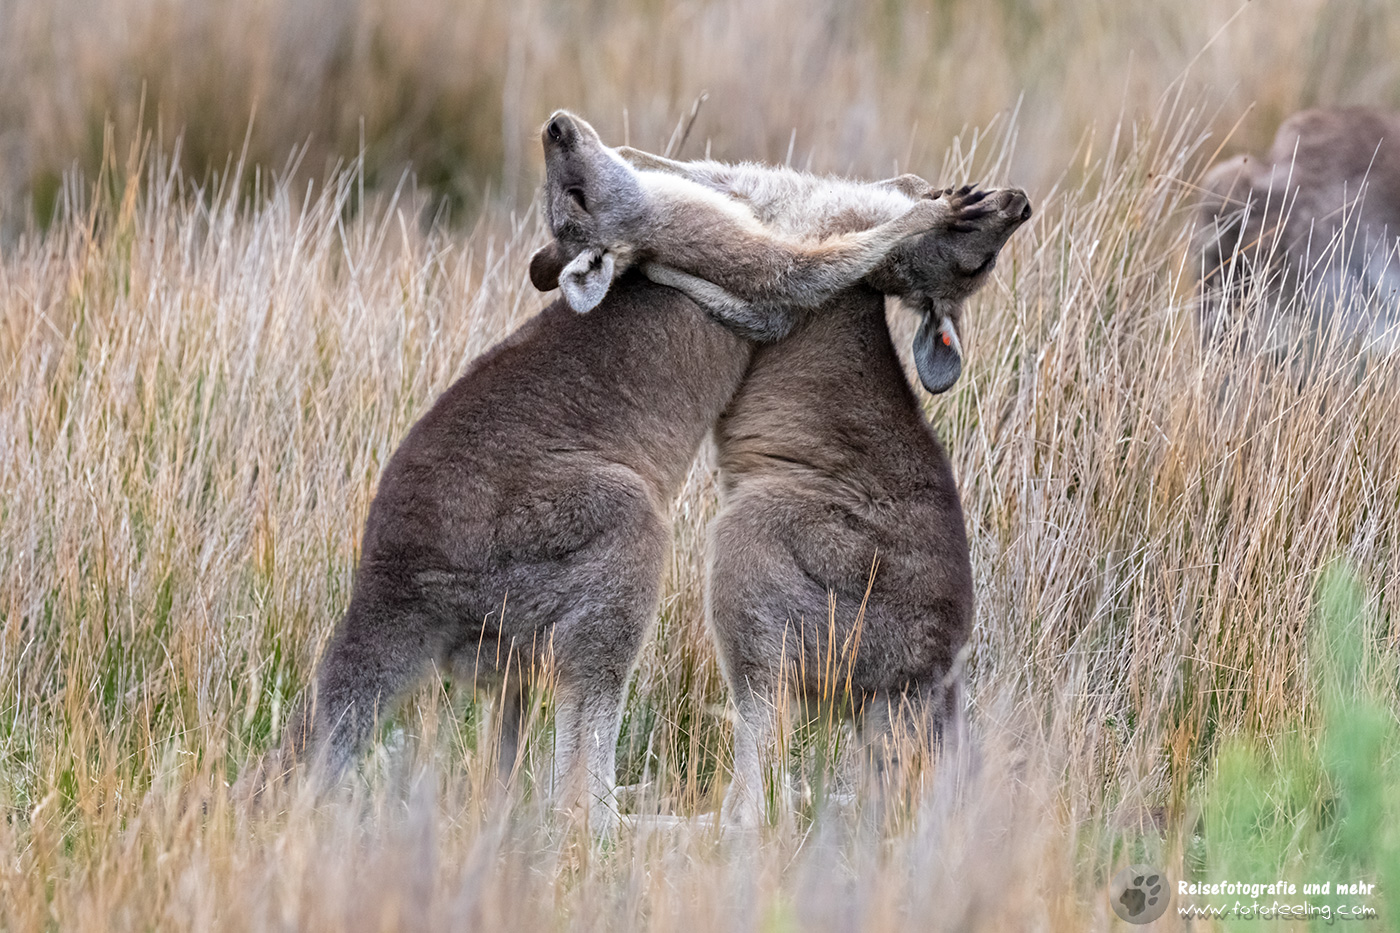 Kämpfende Graue Riesenkängurus, Wilsons Promontory National Park, Victoria, Australien